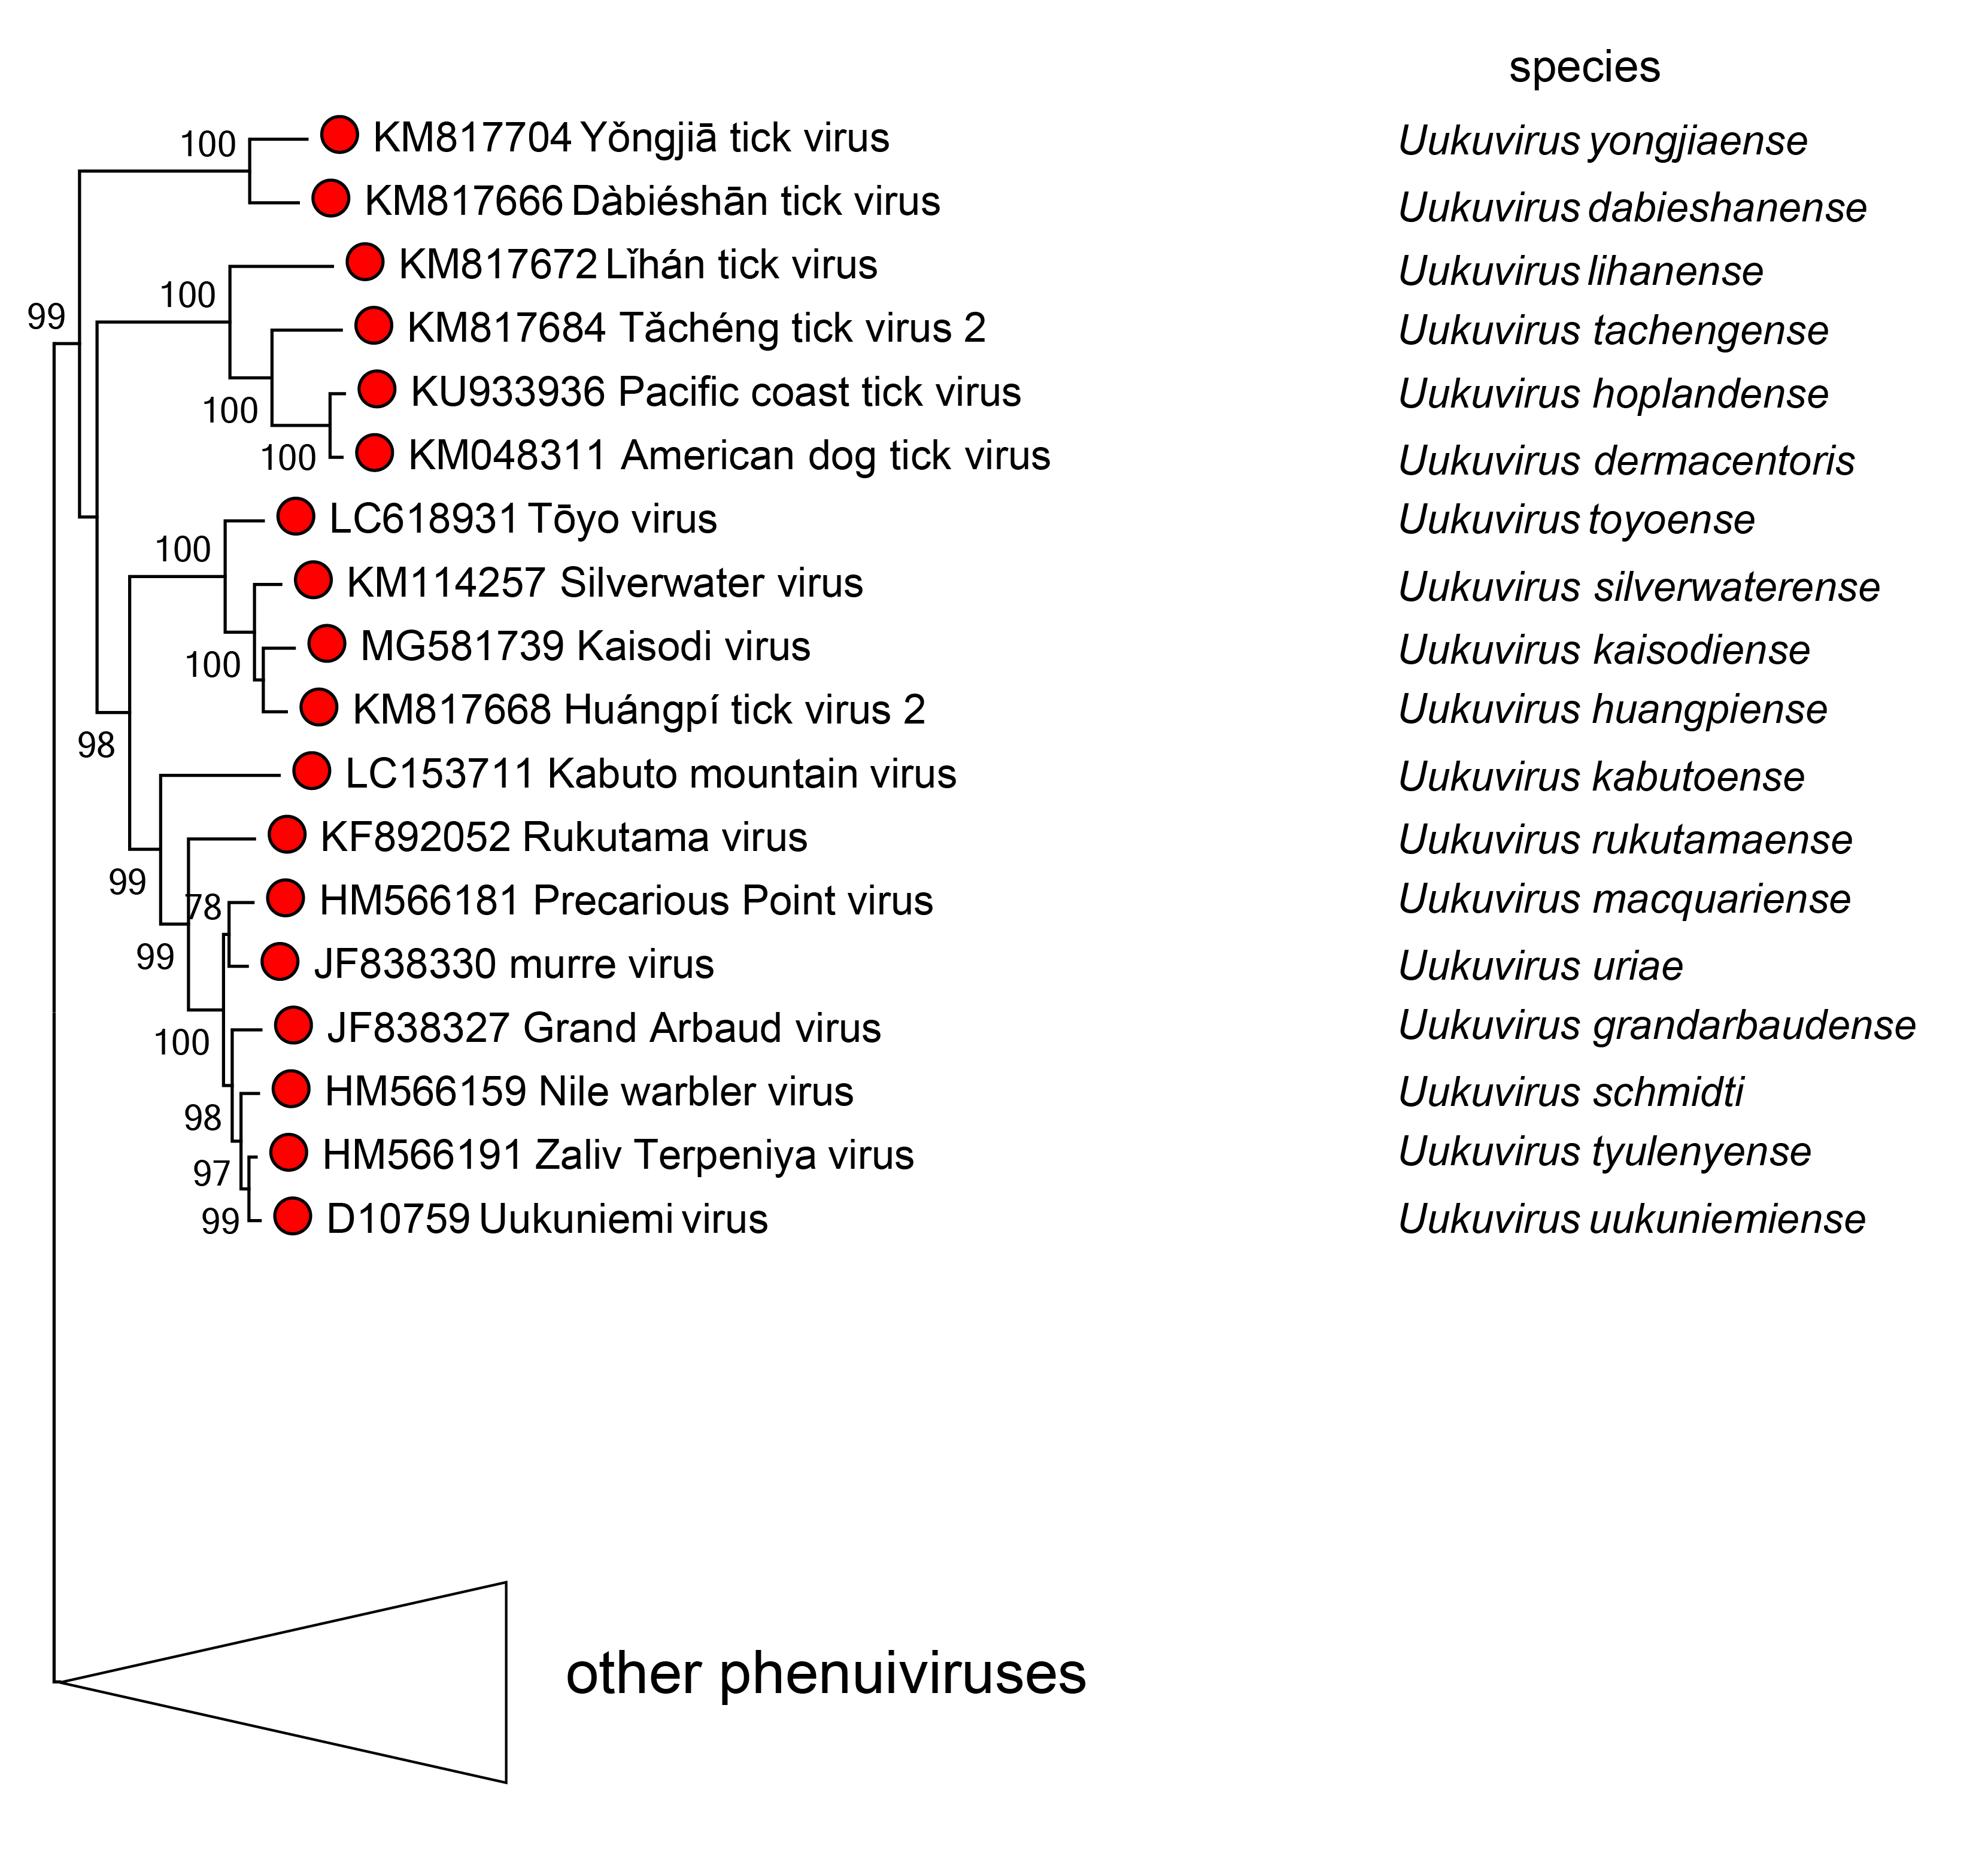 Uukuvirus phylogeny